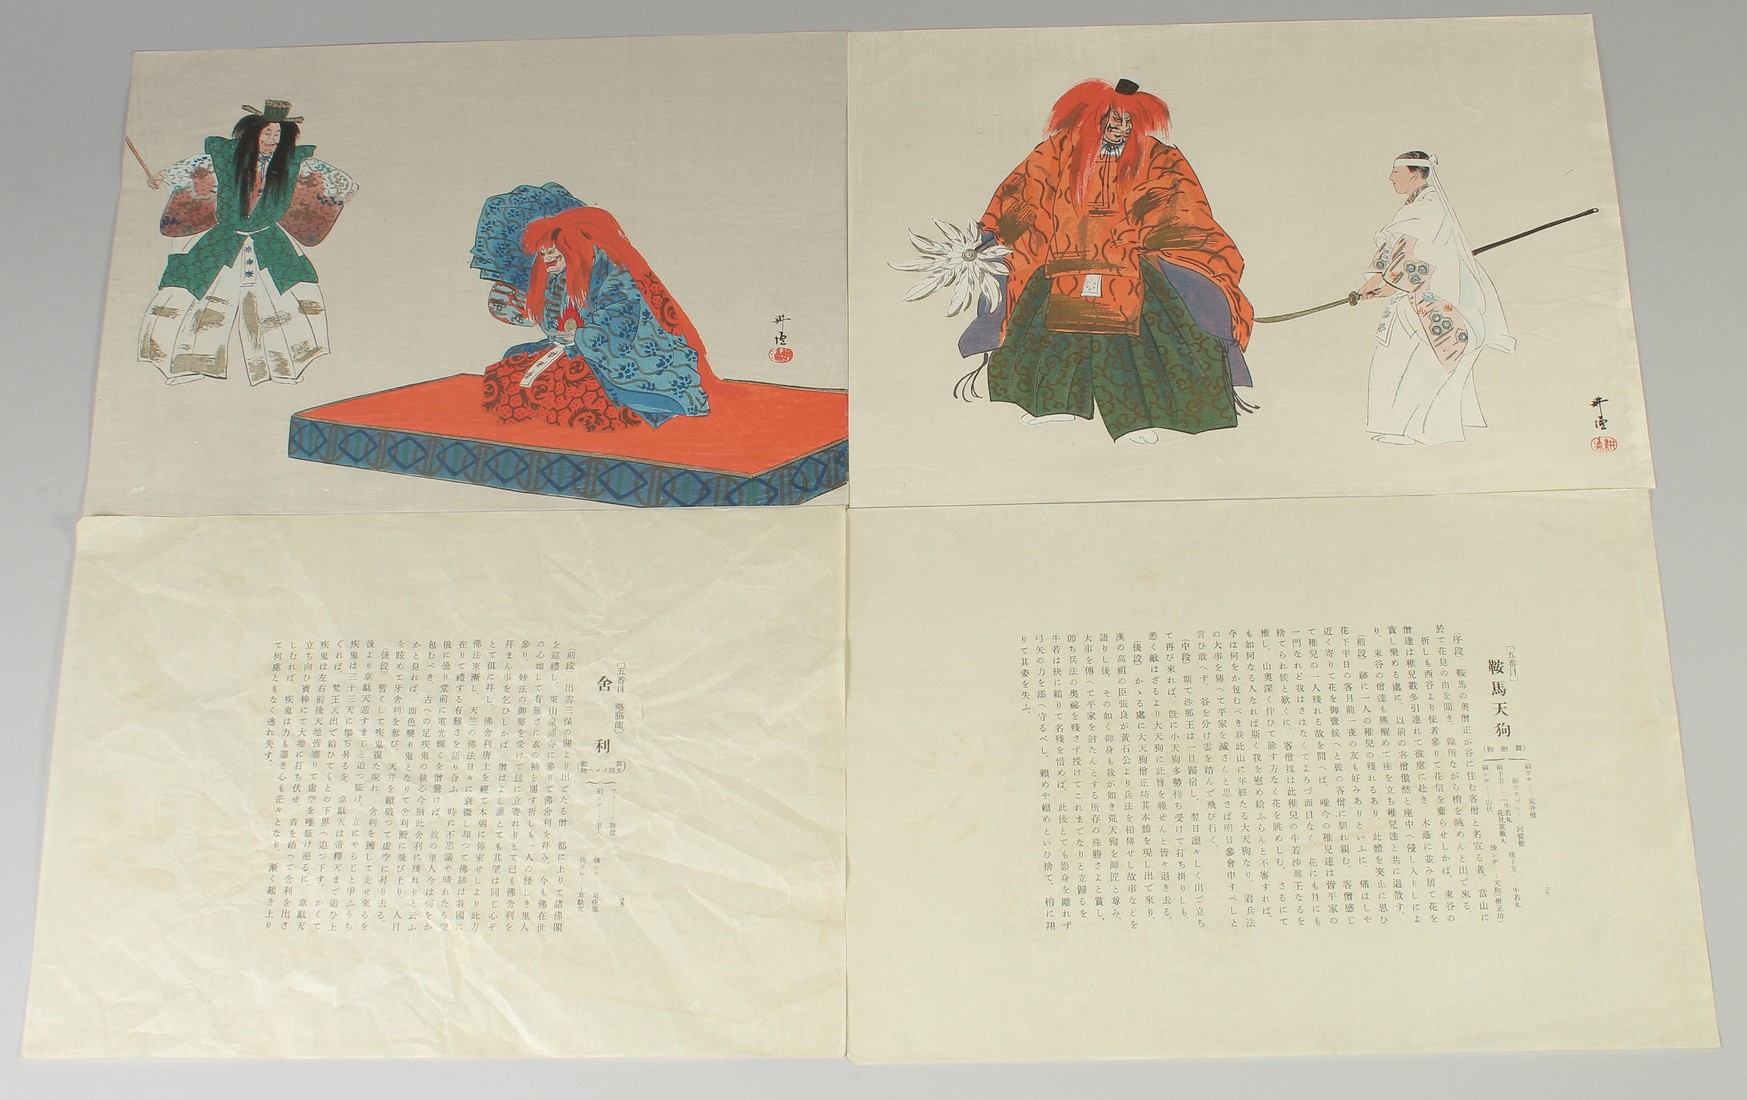 KOGYO TSUKIOKA (1869-1927): NOH THEATRE PLAYS, two mid-19th century original Japanese woodblock